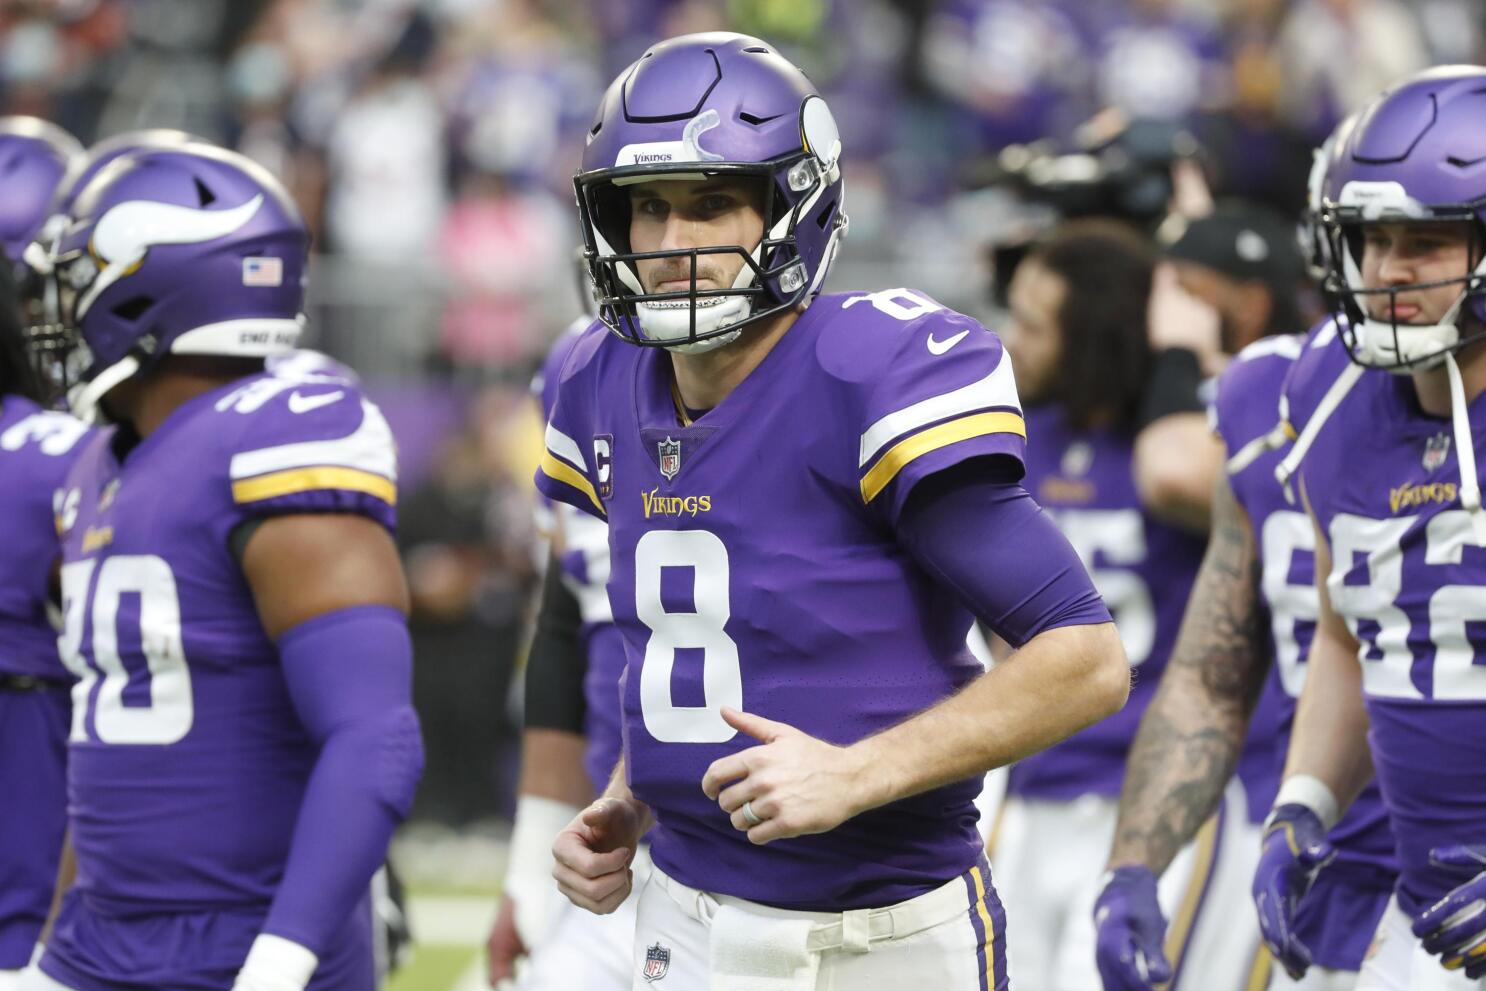 PurplePTSD: The 'If' Hanging over Vikings Season, Salary Cap Brass